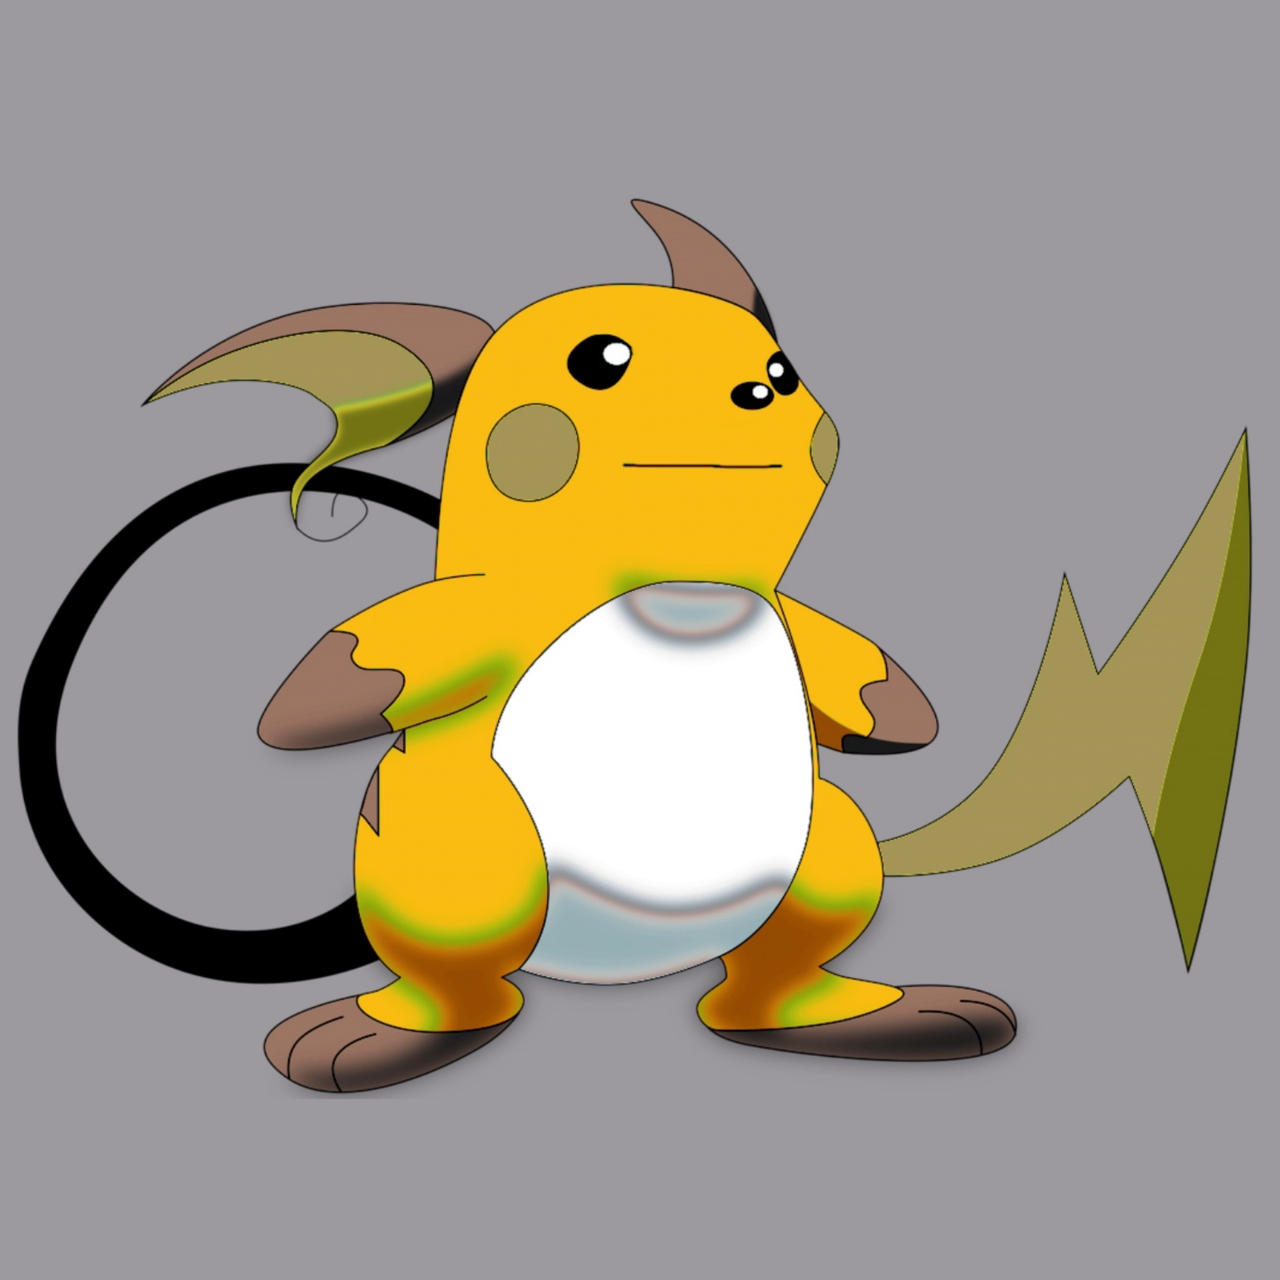 Pikachu new evolution Kaenchu (Mega Evolution) by AlexRegele1 on DeviantArt